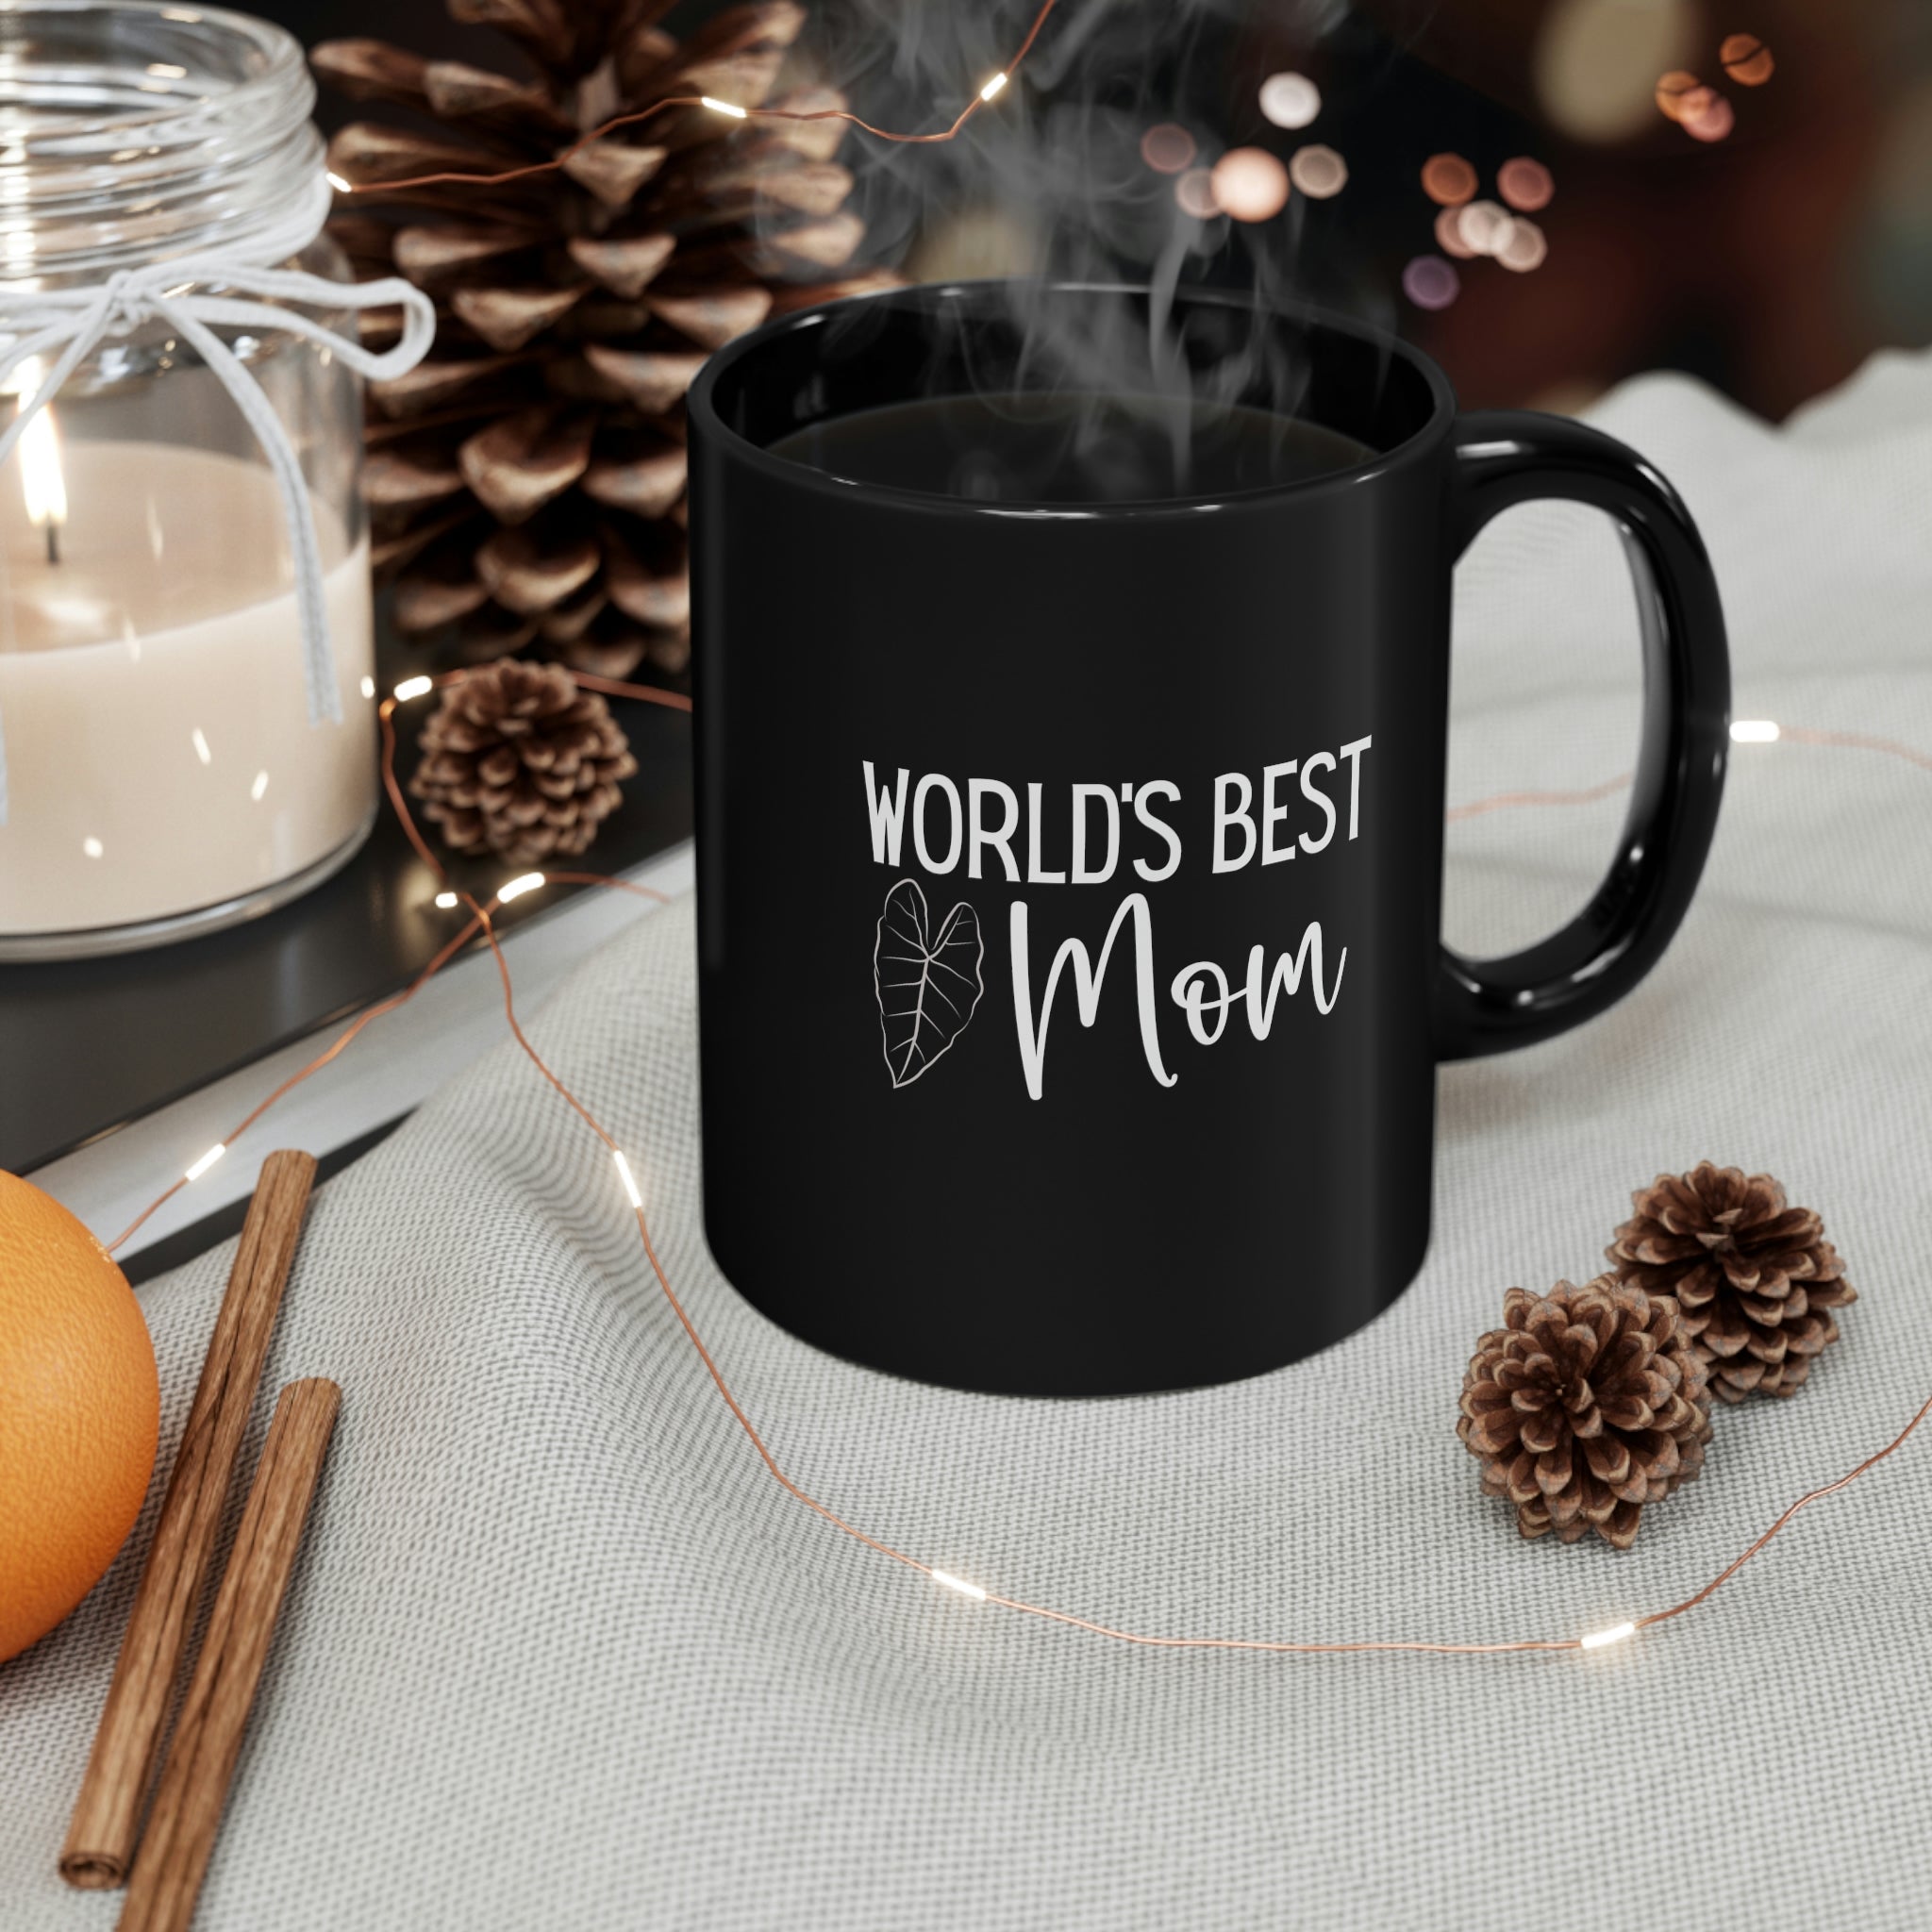 Best Mom In The World Ceramic Mug 11oz – MarsTrendy